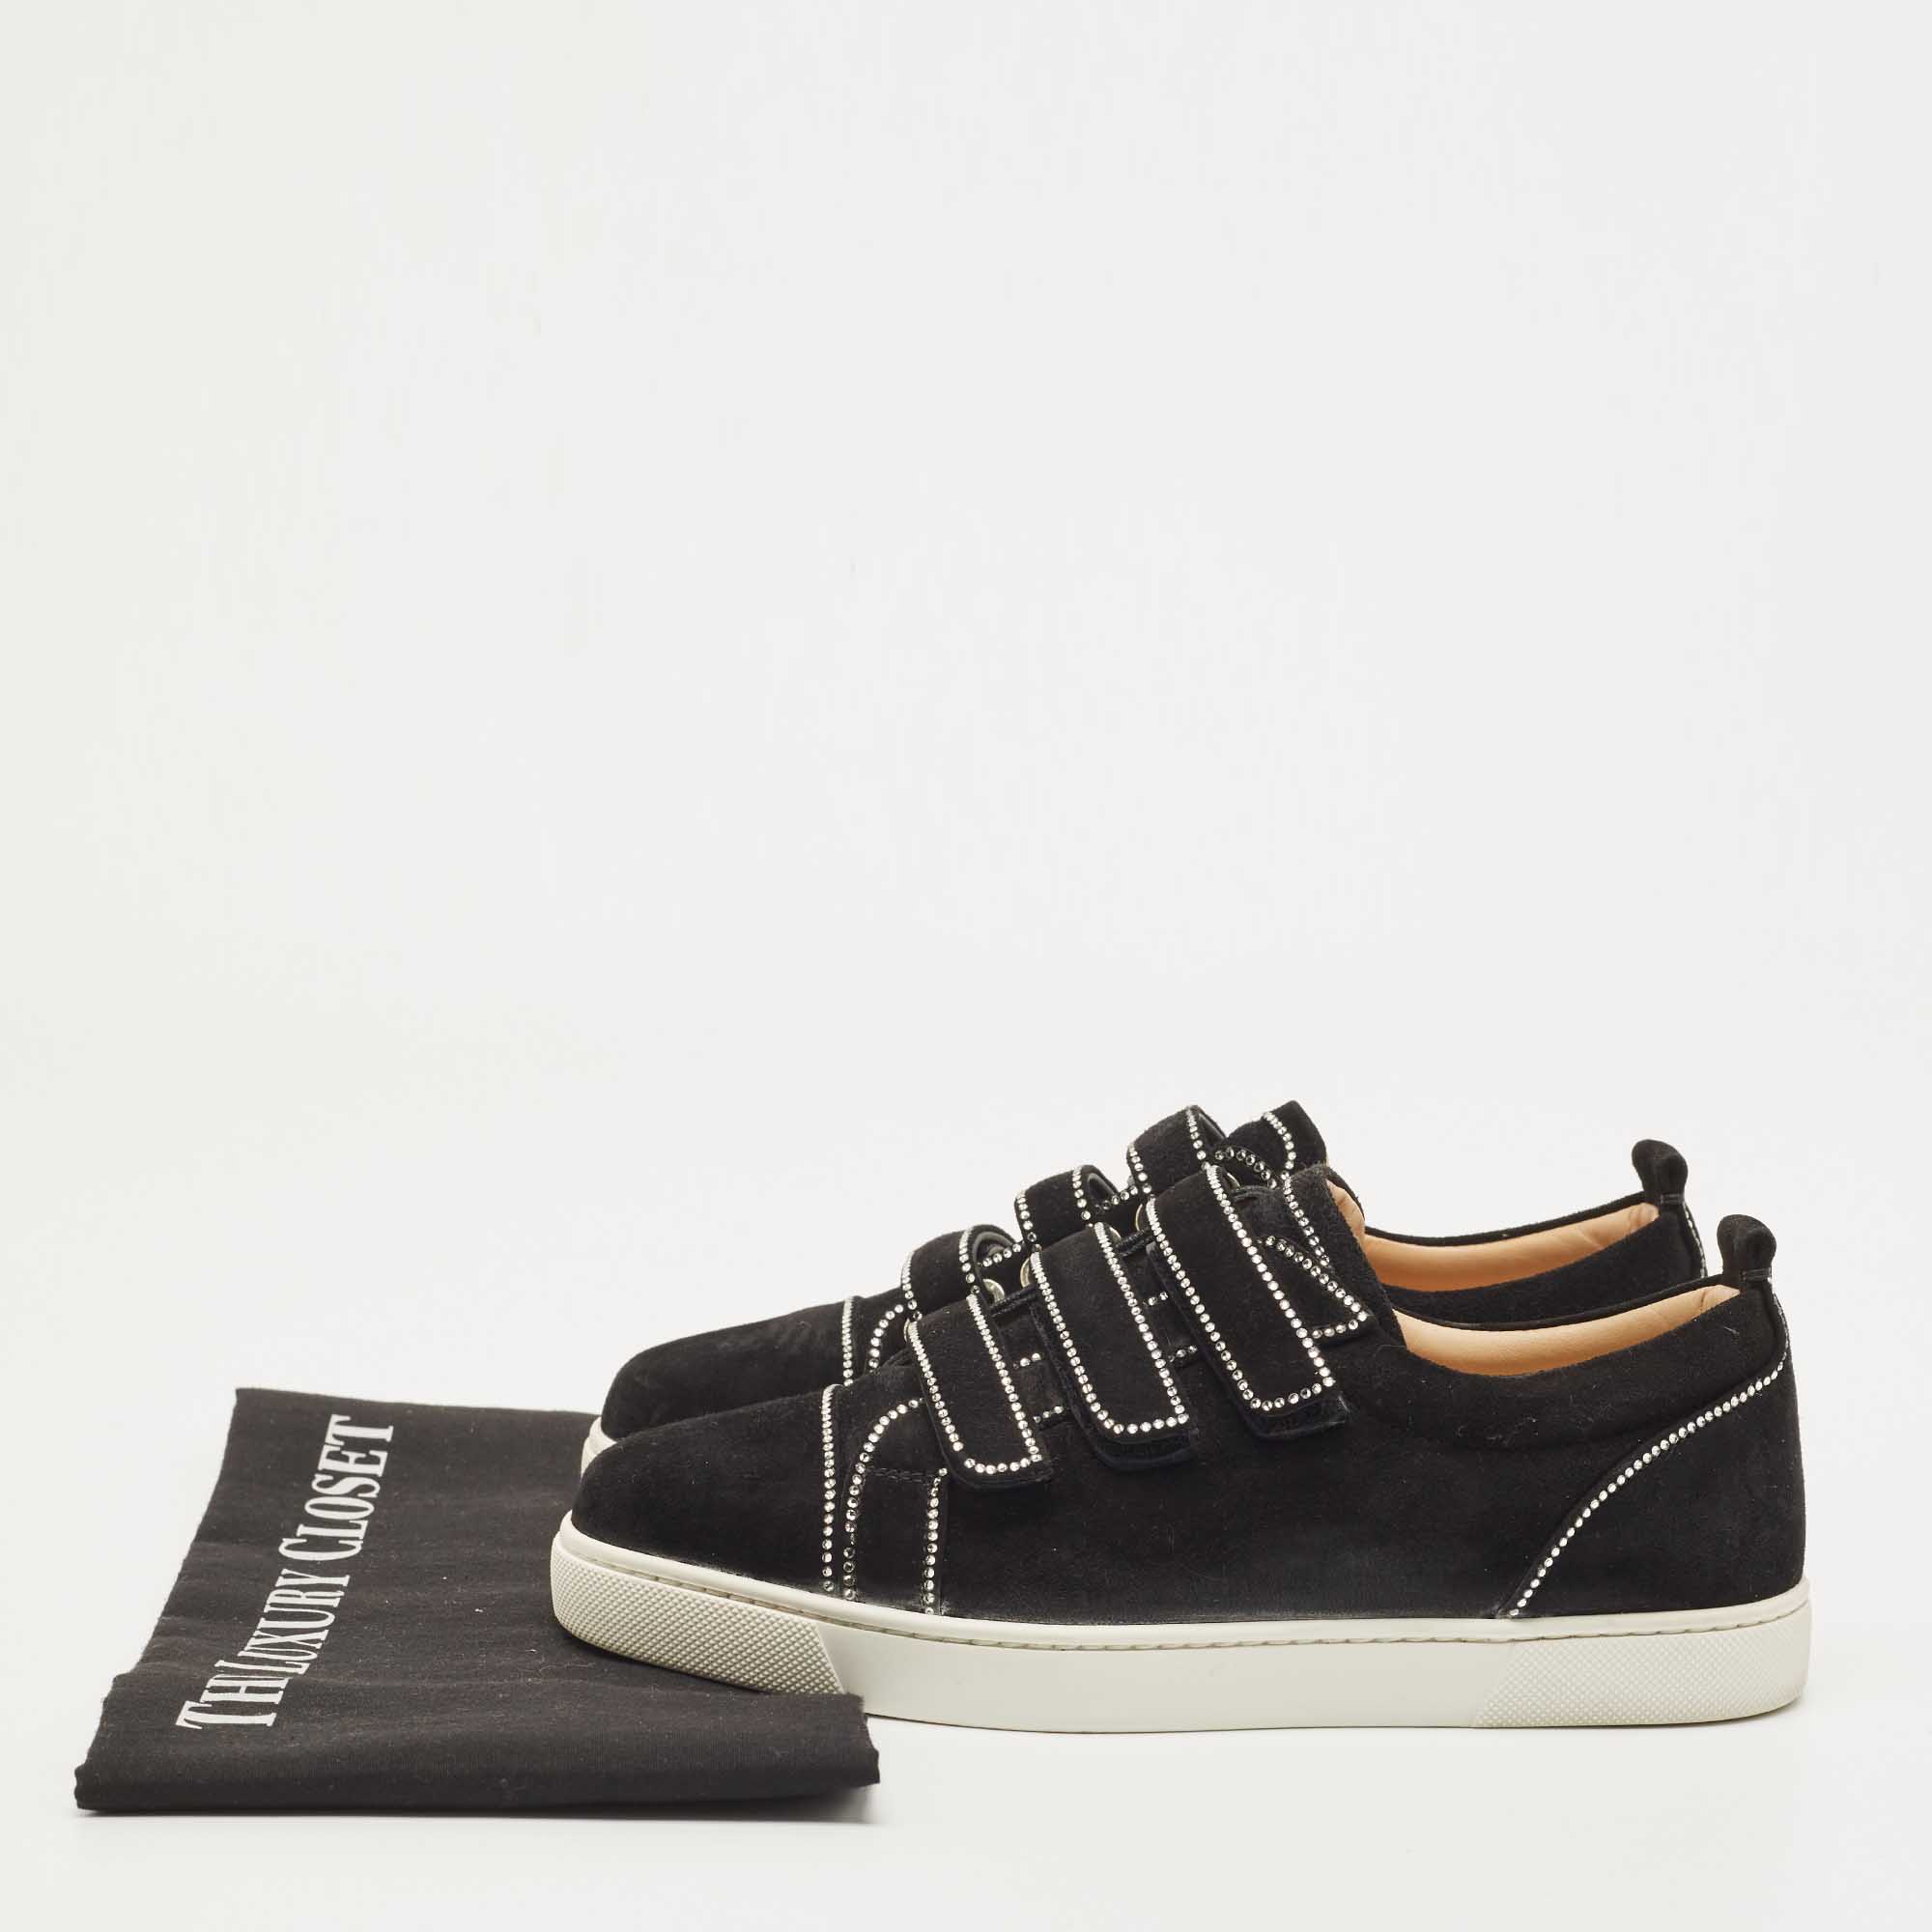 Christian Louboutin Black Suede Kiddo Bordo Embellished Velcro Low Top Sneakers Size 38.5